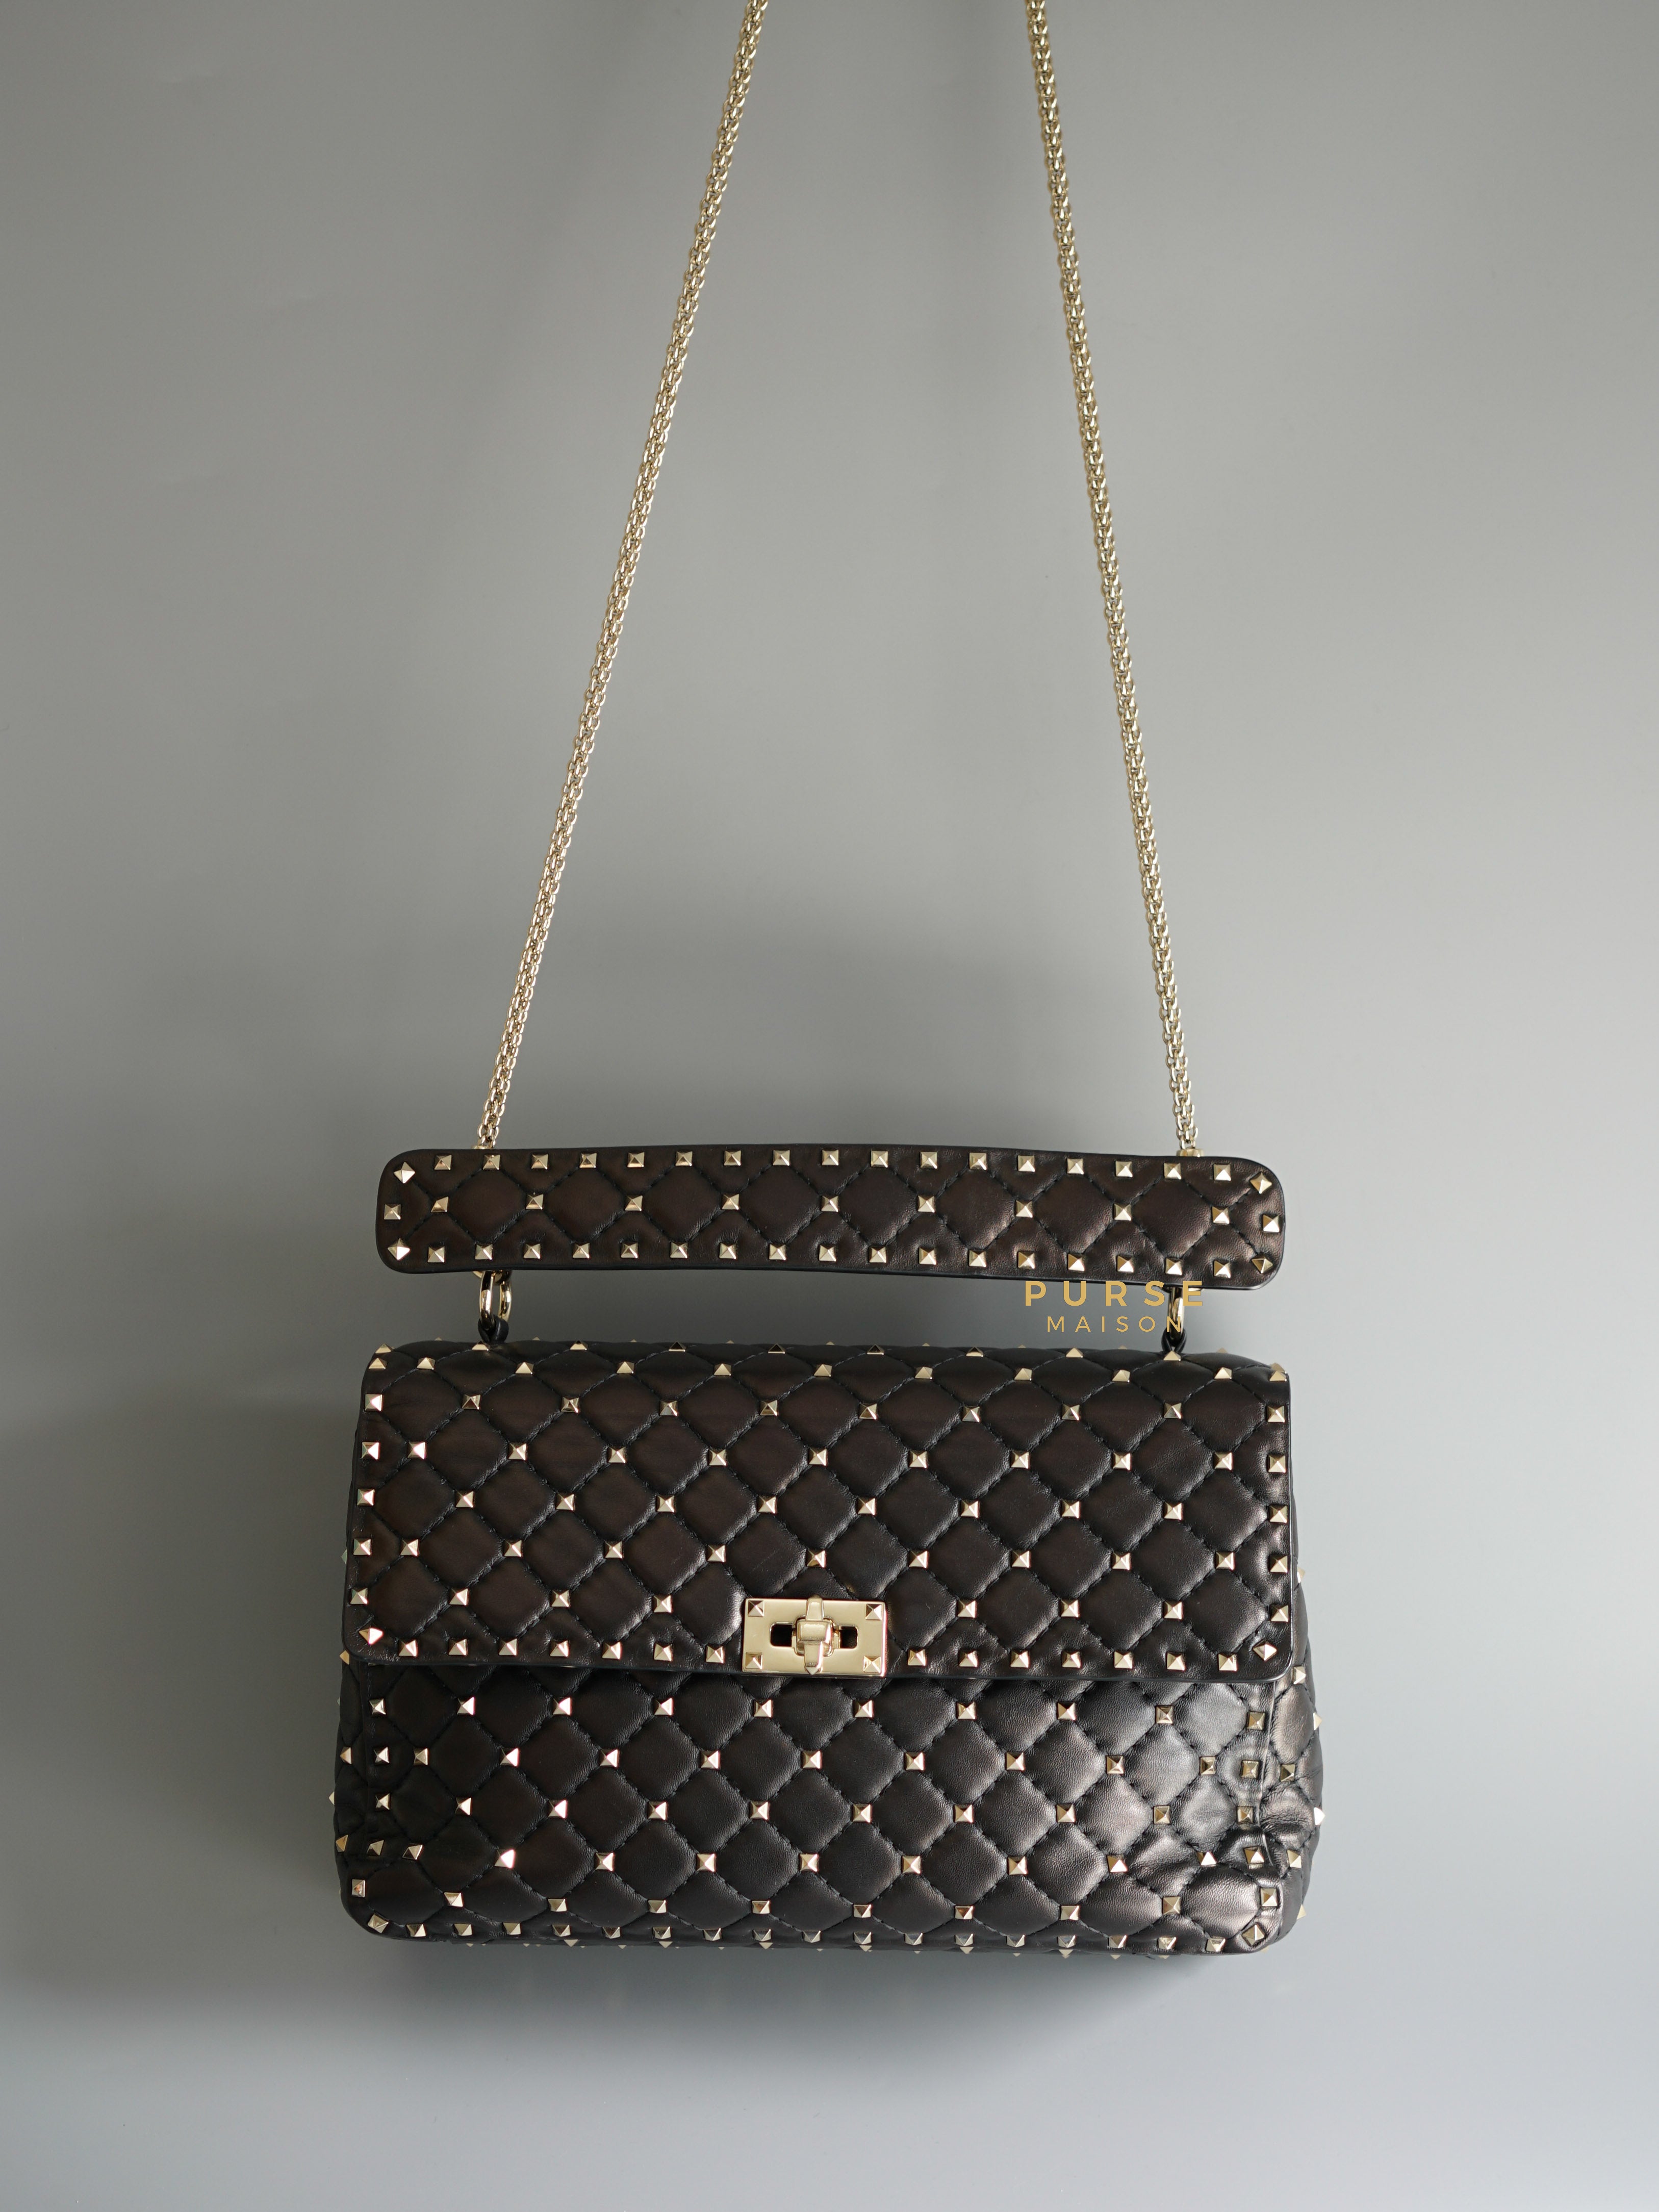 Valentino Garavani Rockstud Spike Large Black Quilted Leather Bag | Purse Maison Luxury Bags Shop